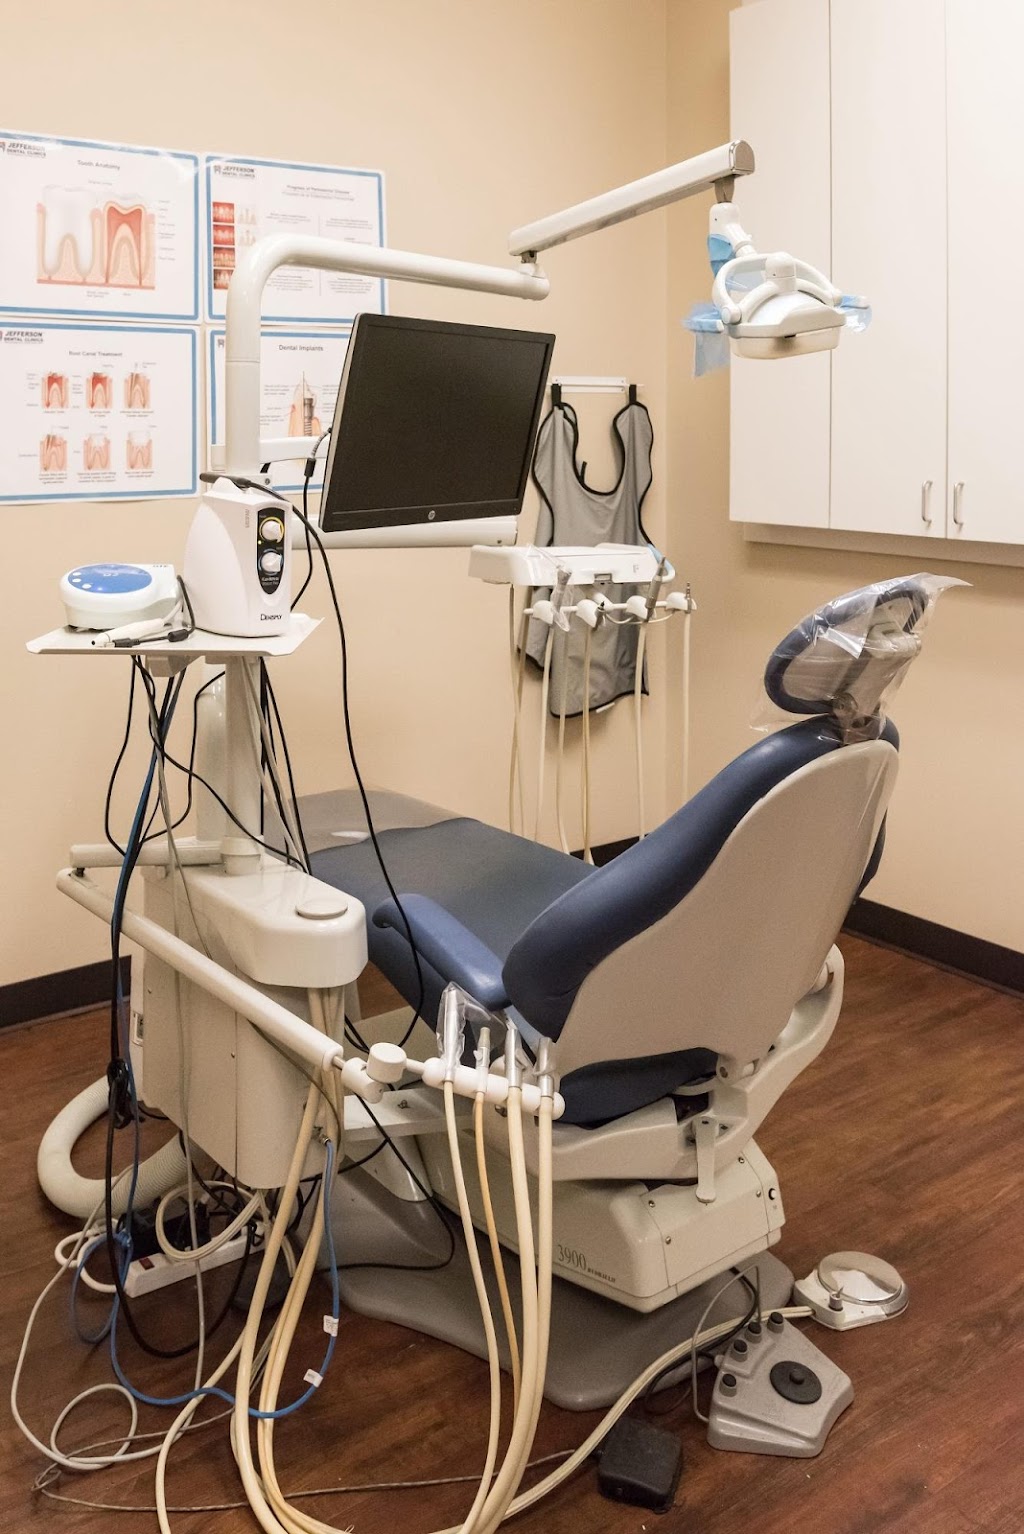 Jefferson Dental & Orthodontics | 2800 8th Ave, Fort Worth, TX 76110, USA | Phone: (817) 769-3700